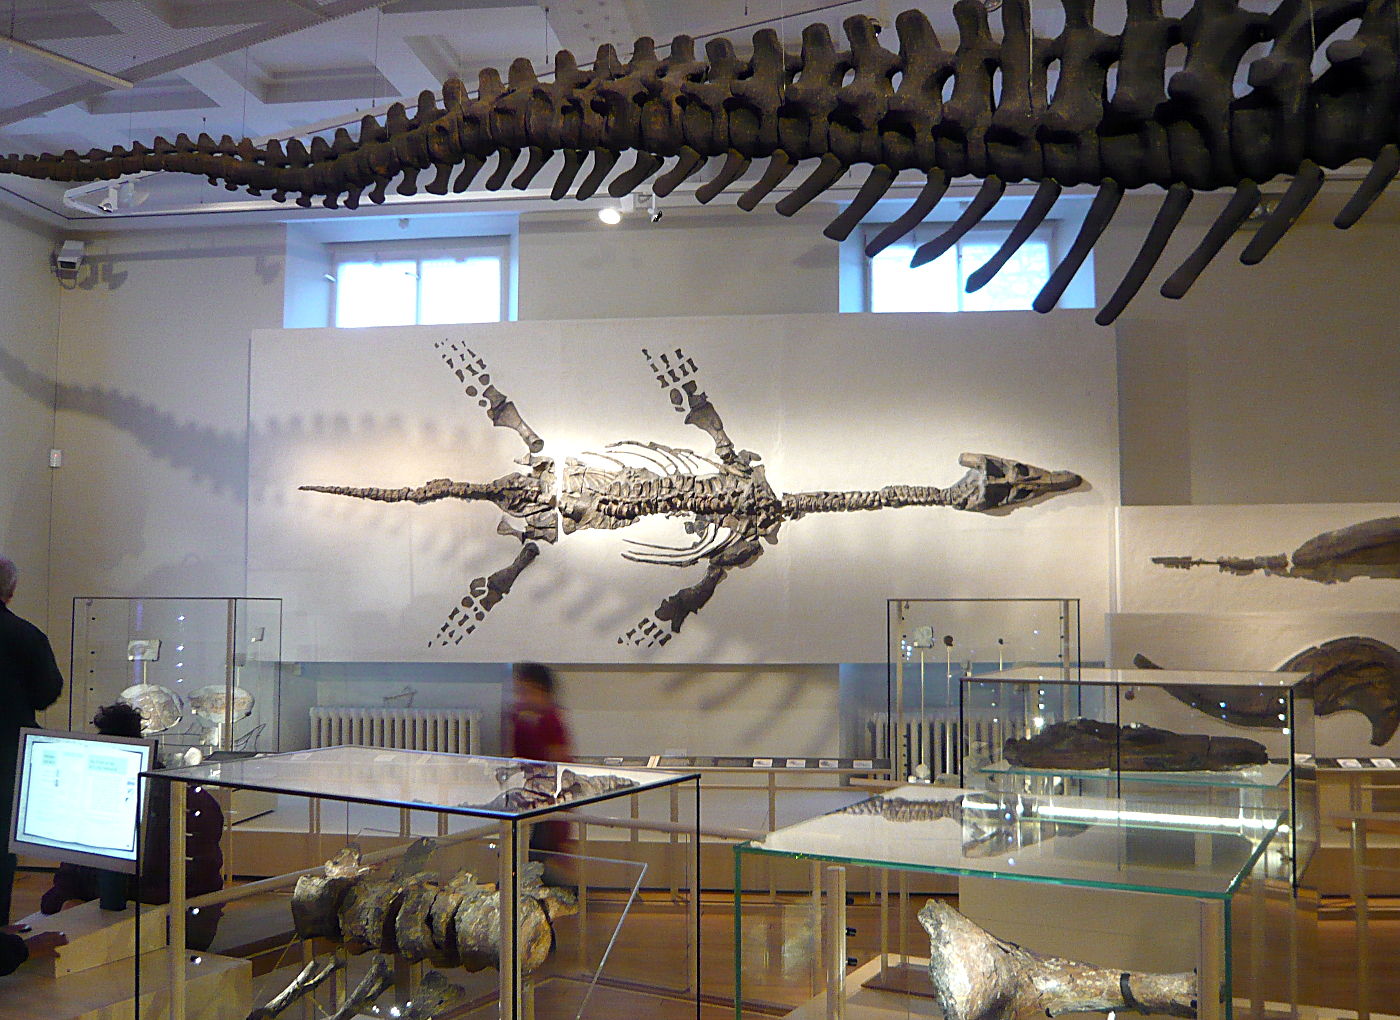 The "Barrow Kipper" (Atychodracon megacephalus) and the tail of the Rutland Dinosaur